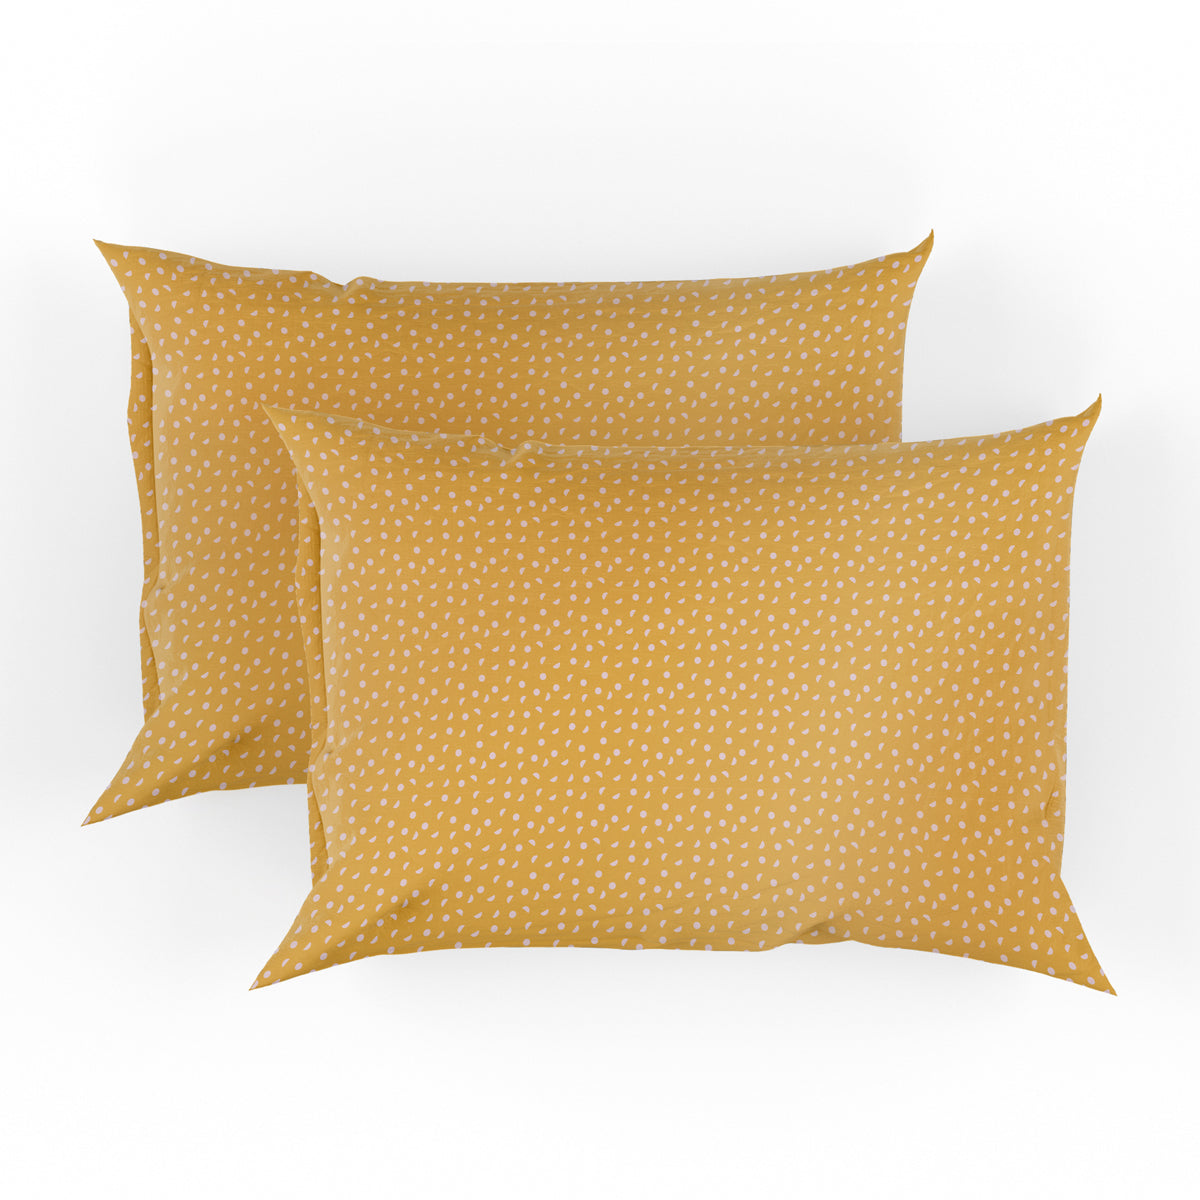 A pair of Queen silk pillowcases - Luna Dot